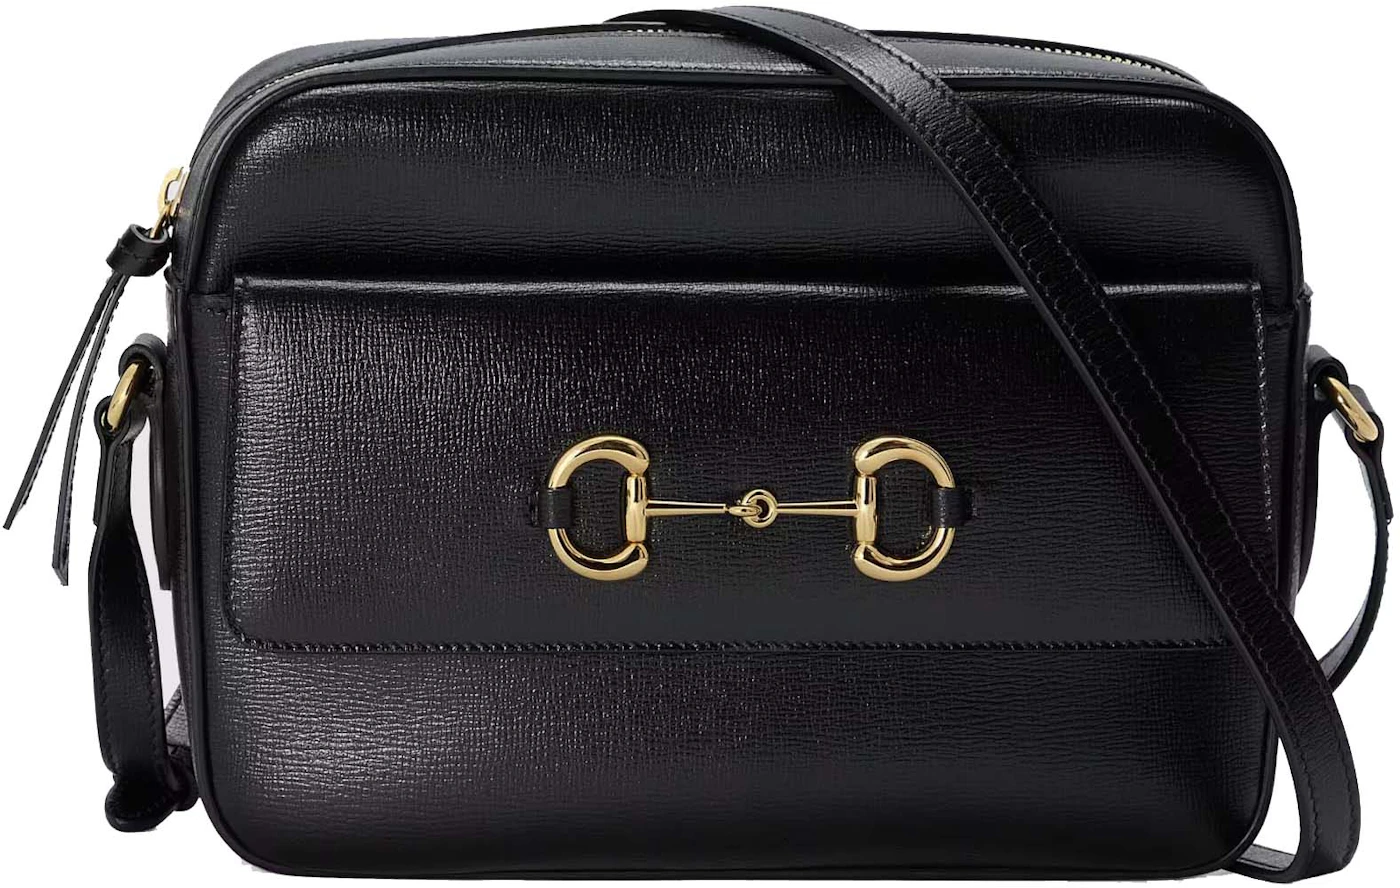 Gucci Horsebit 1955 Small Shoulder Bag In Black Leather